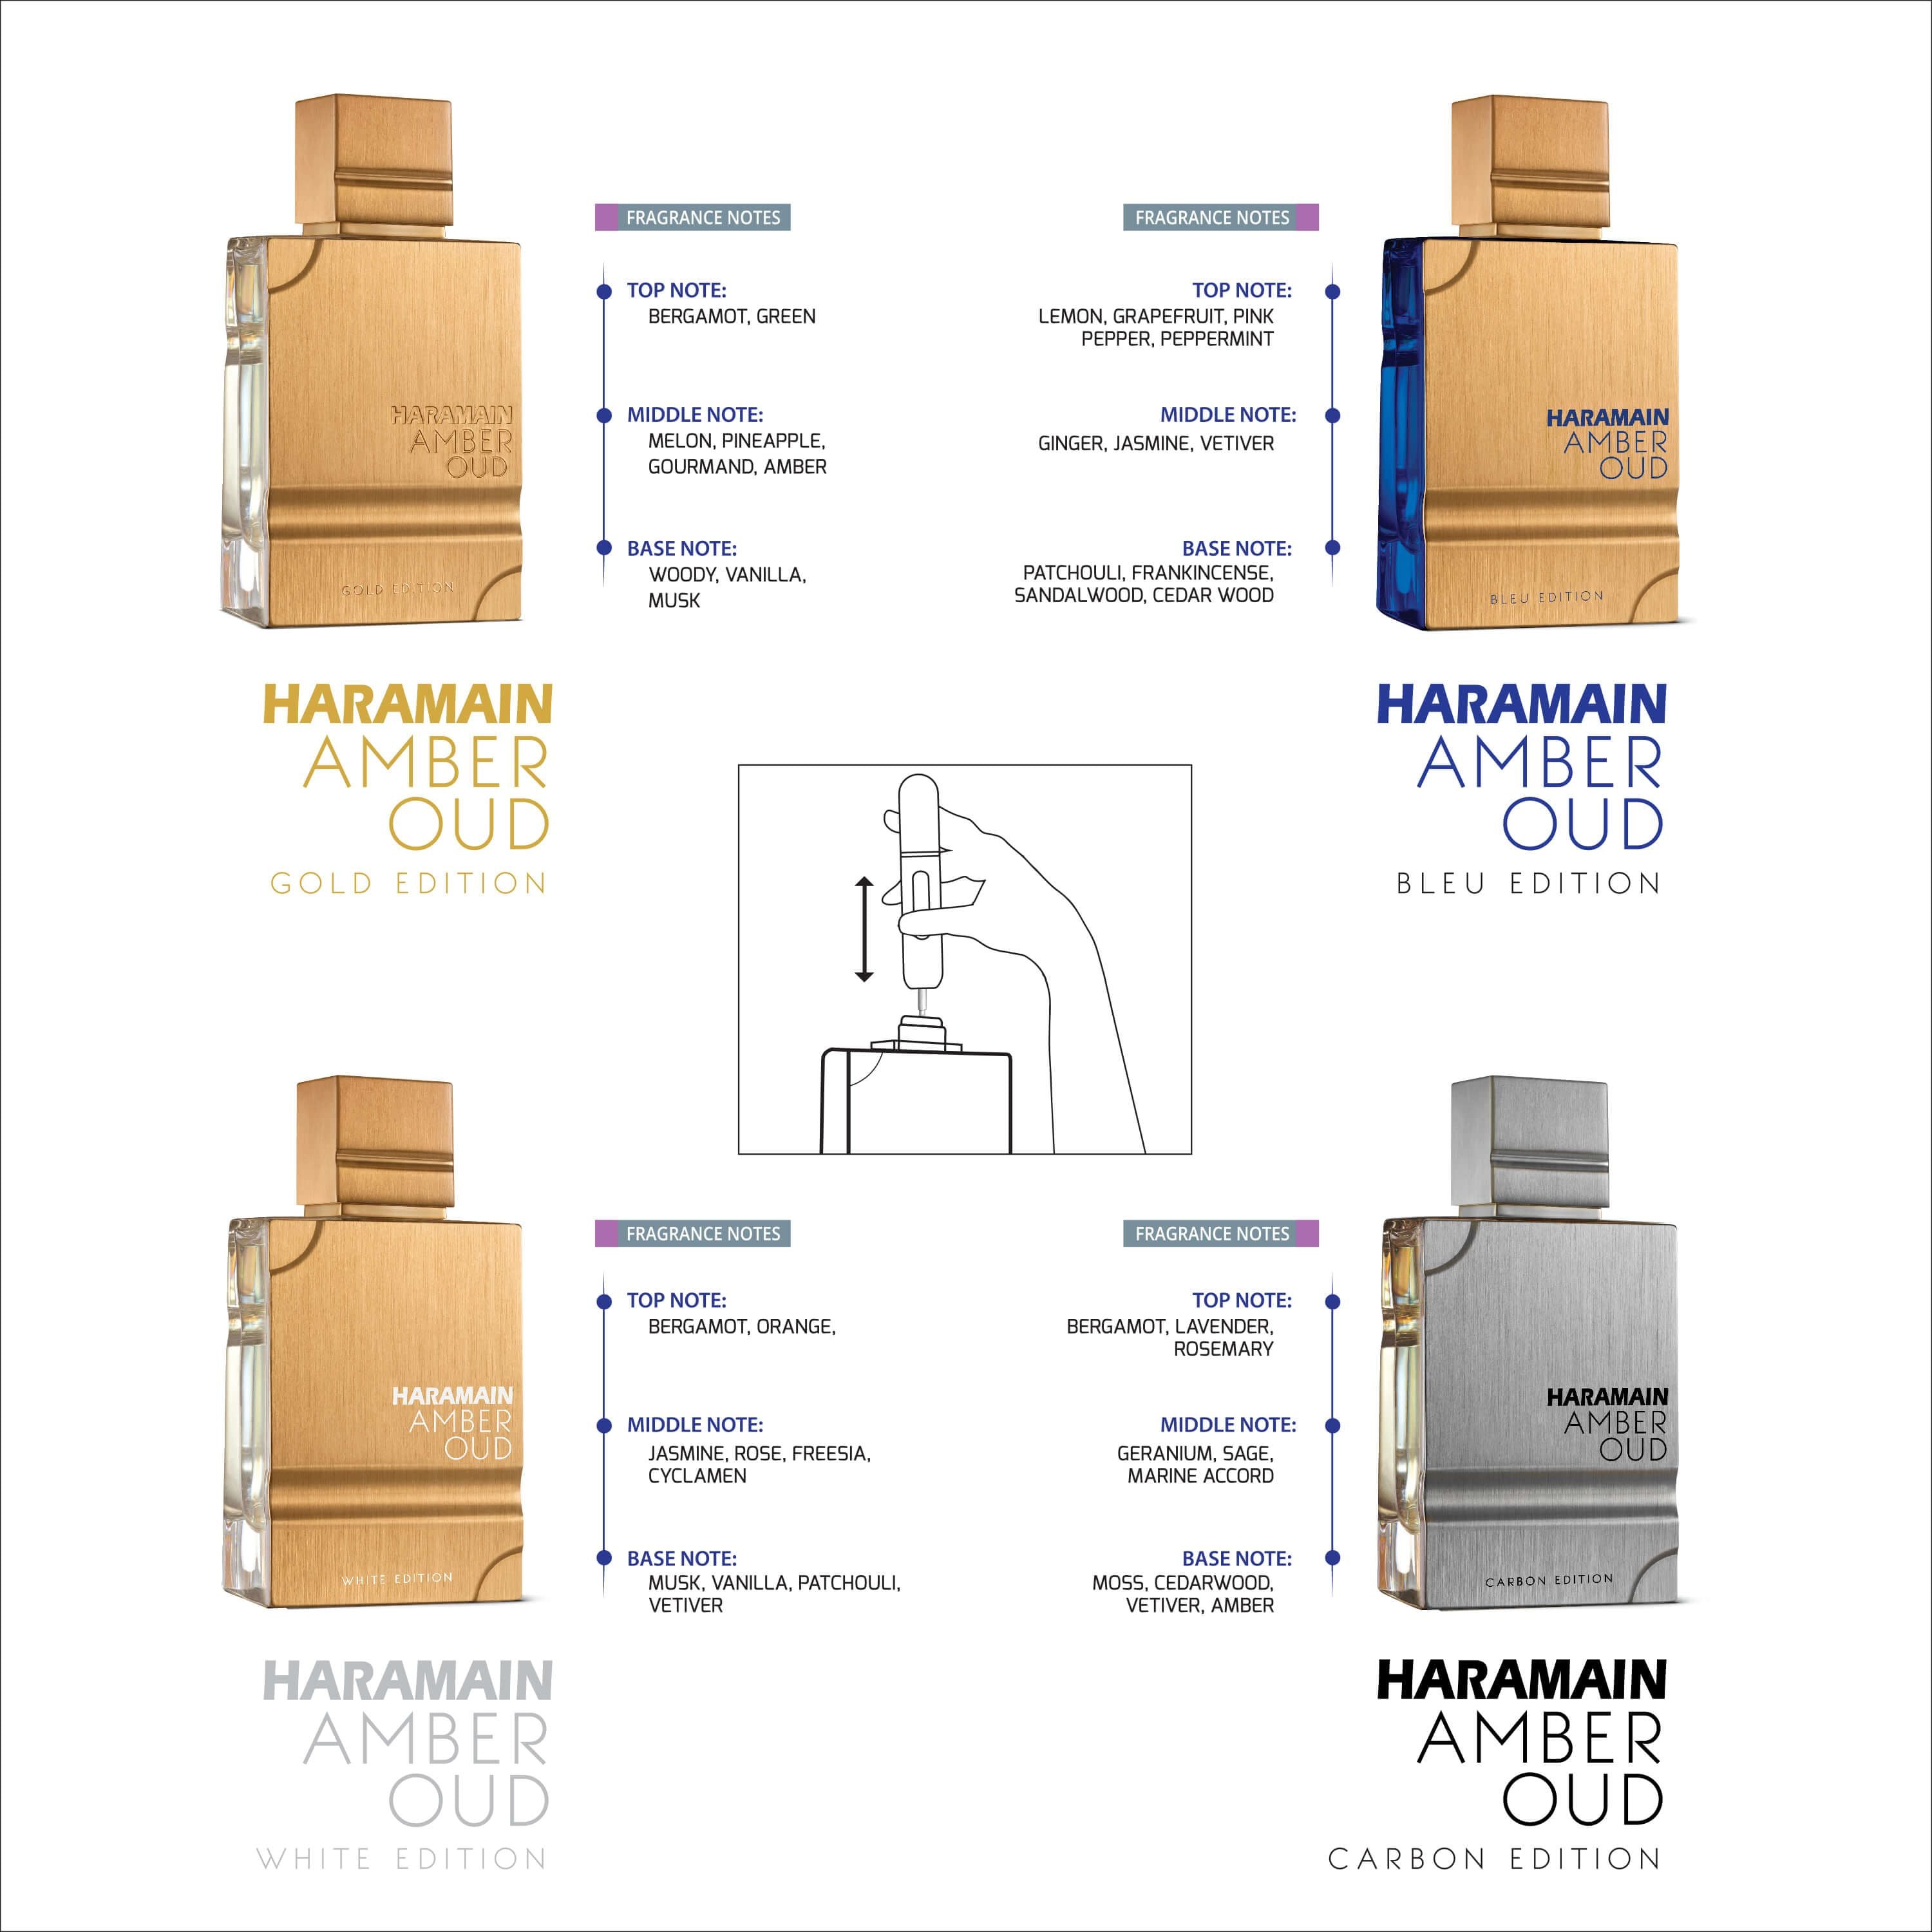 Al Haramain Amber Oud Carbon Edition Perfume Samples